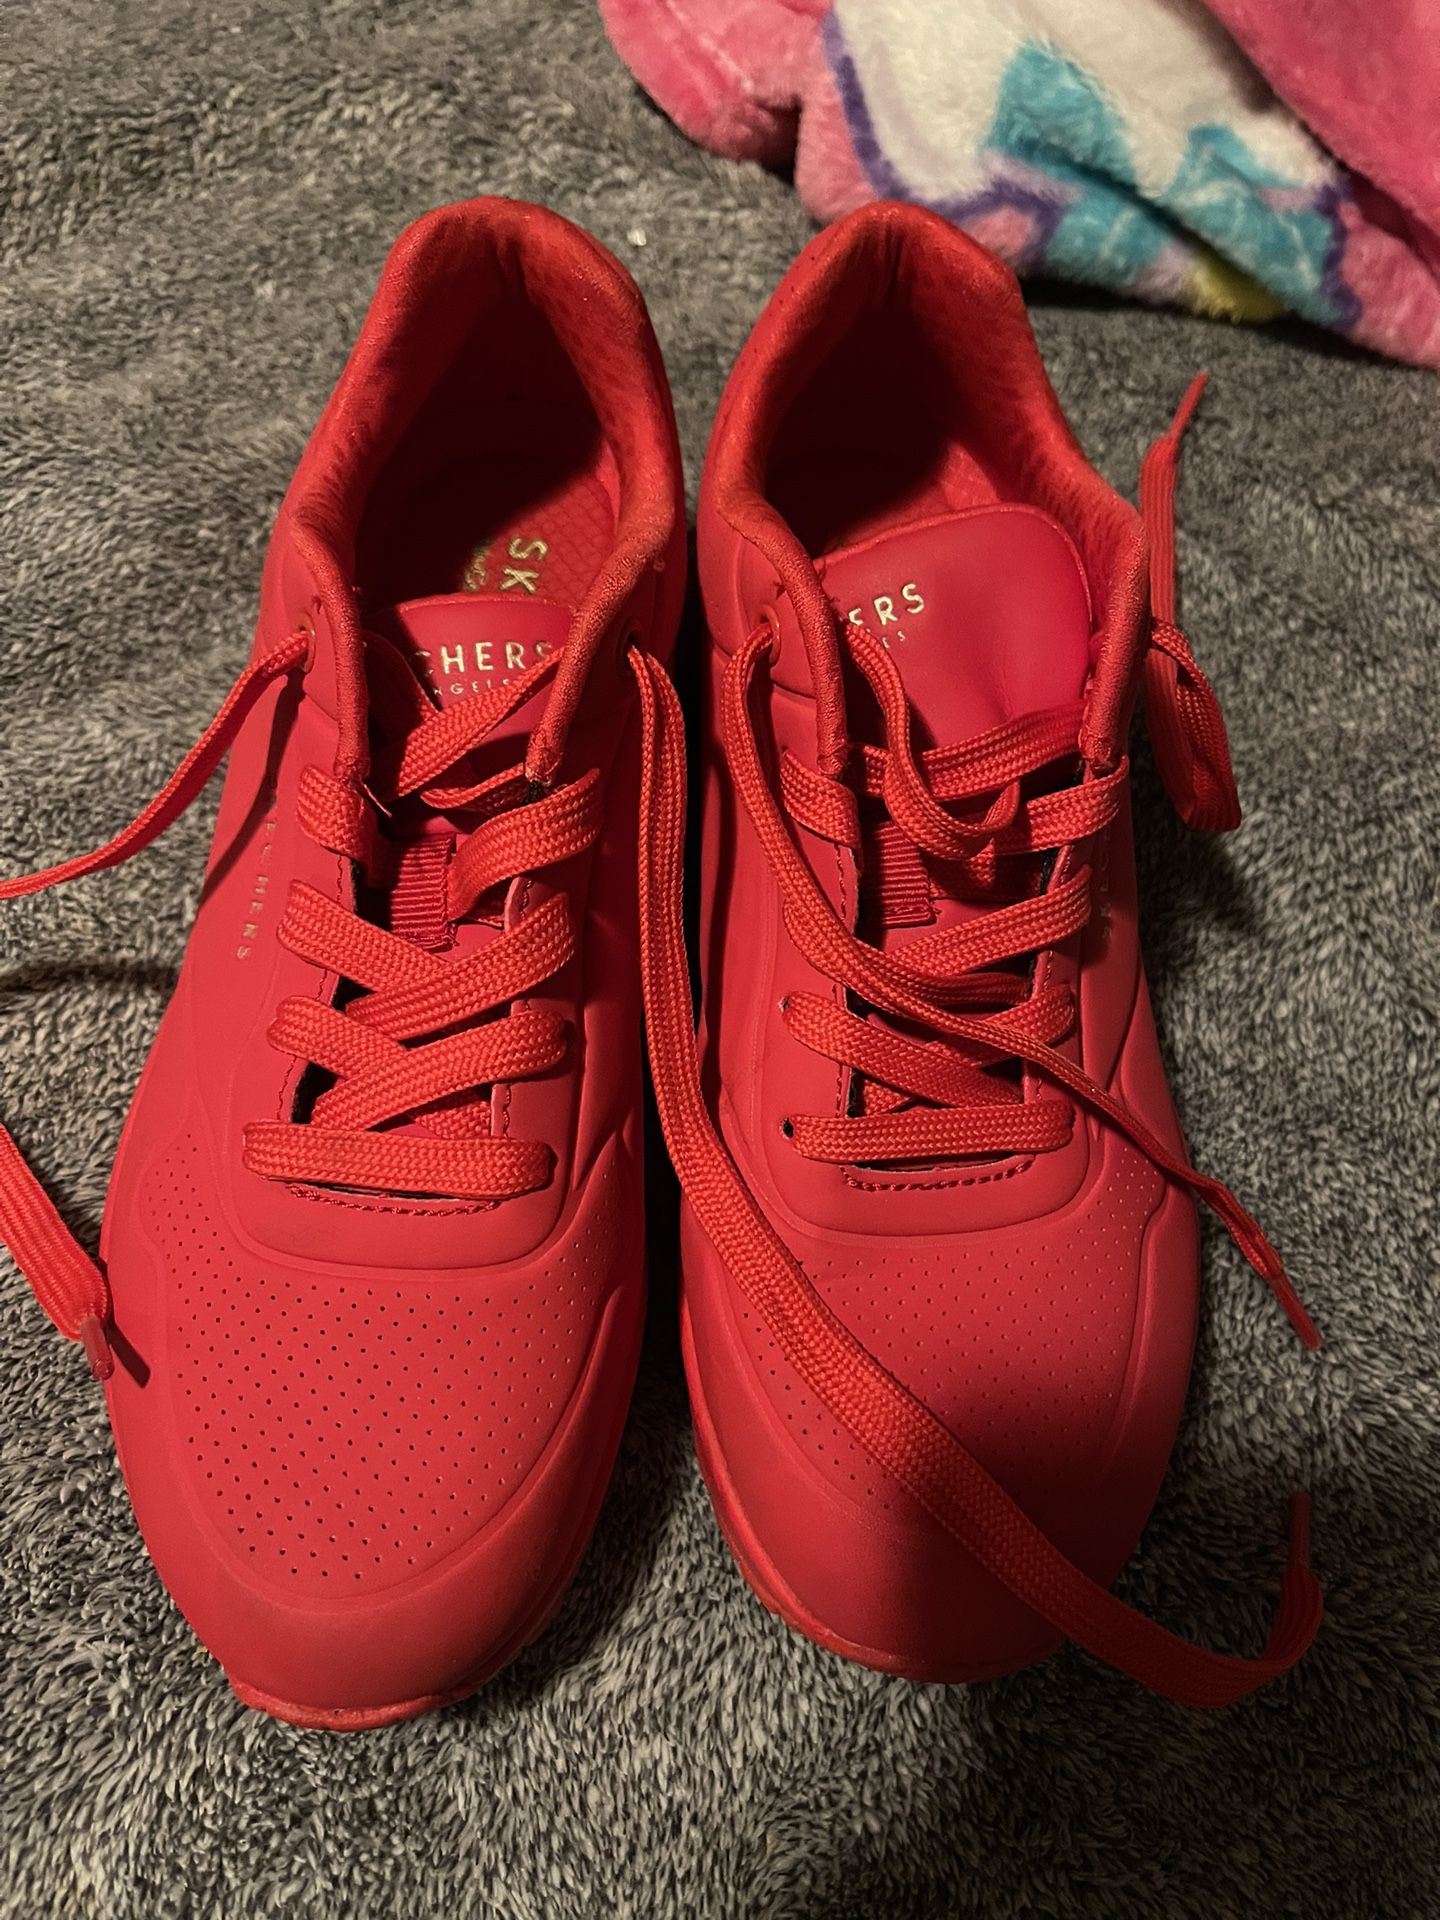 Joke Adgang Ud Skechers woman Shoes In Red for Sale in Long Beach, CA - OfferUp